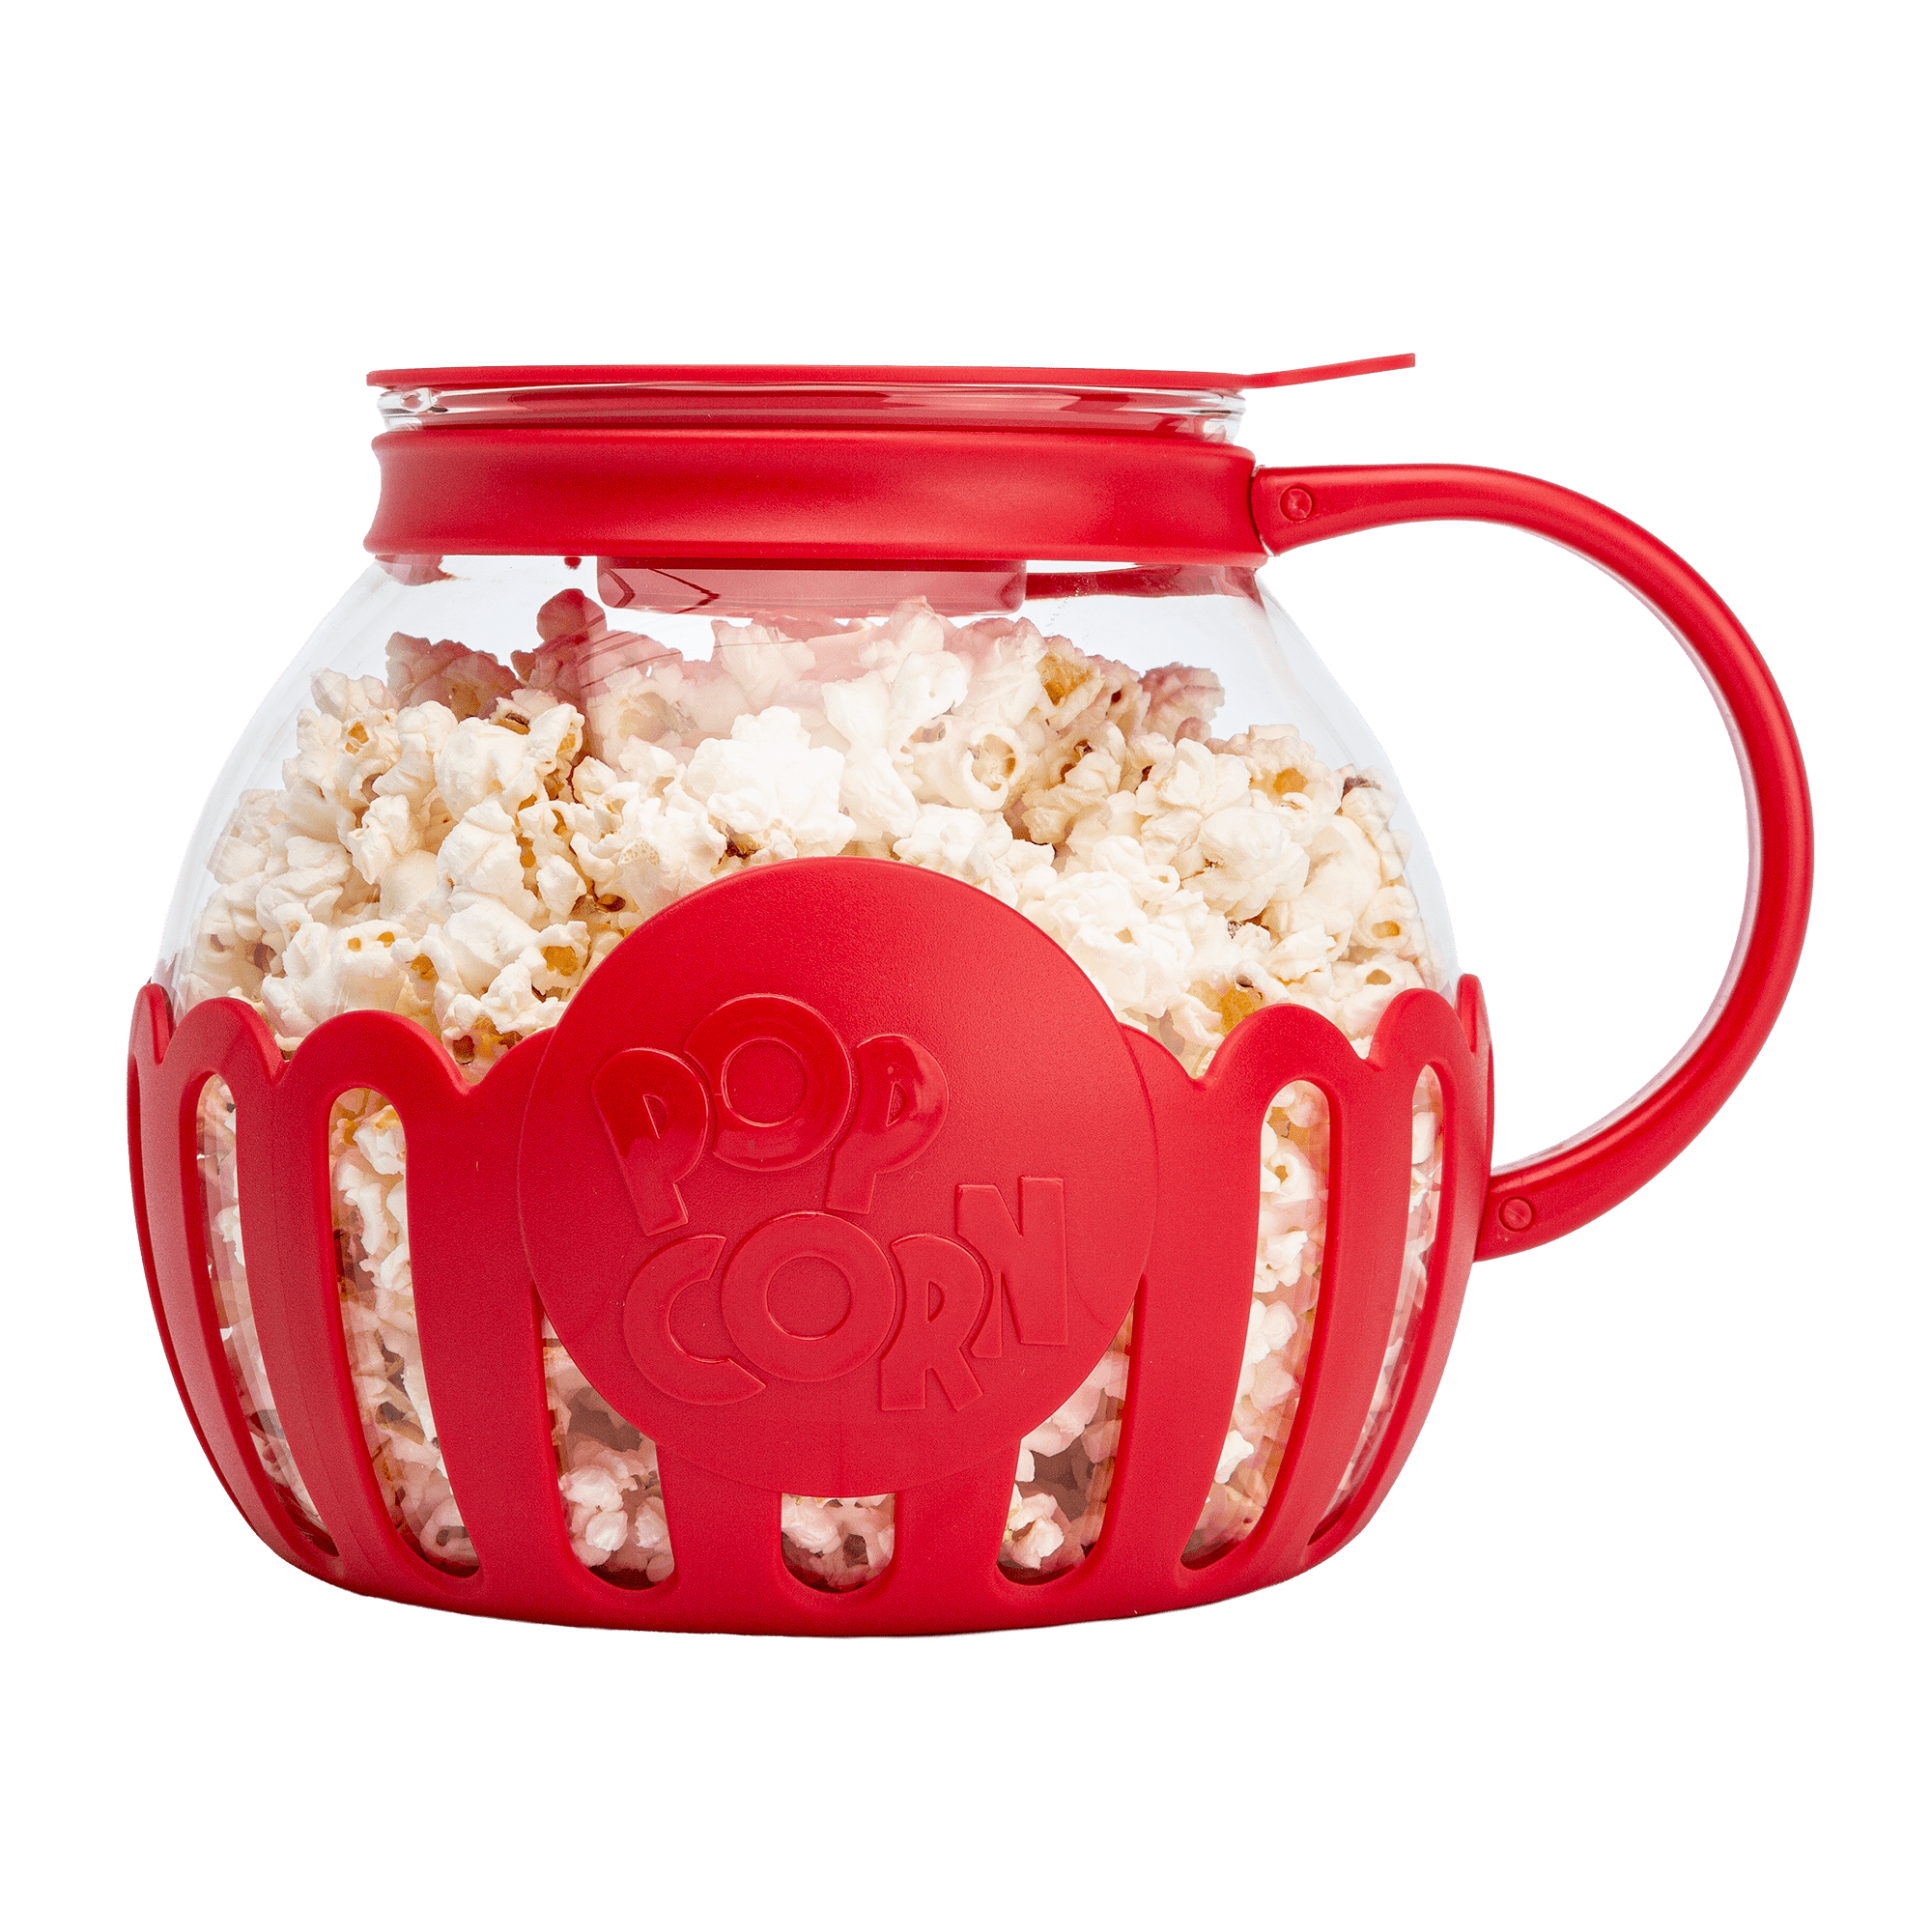 Stir Crazy Popcorn Popper - Various Colors - Sam's Club